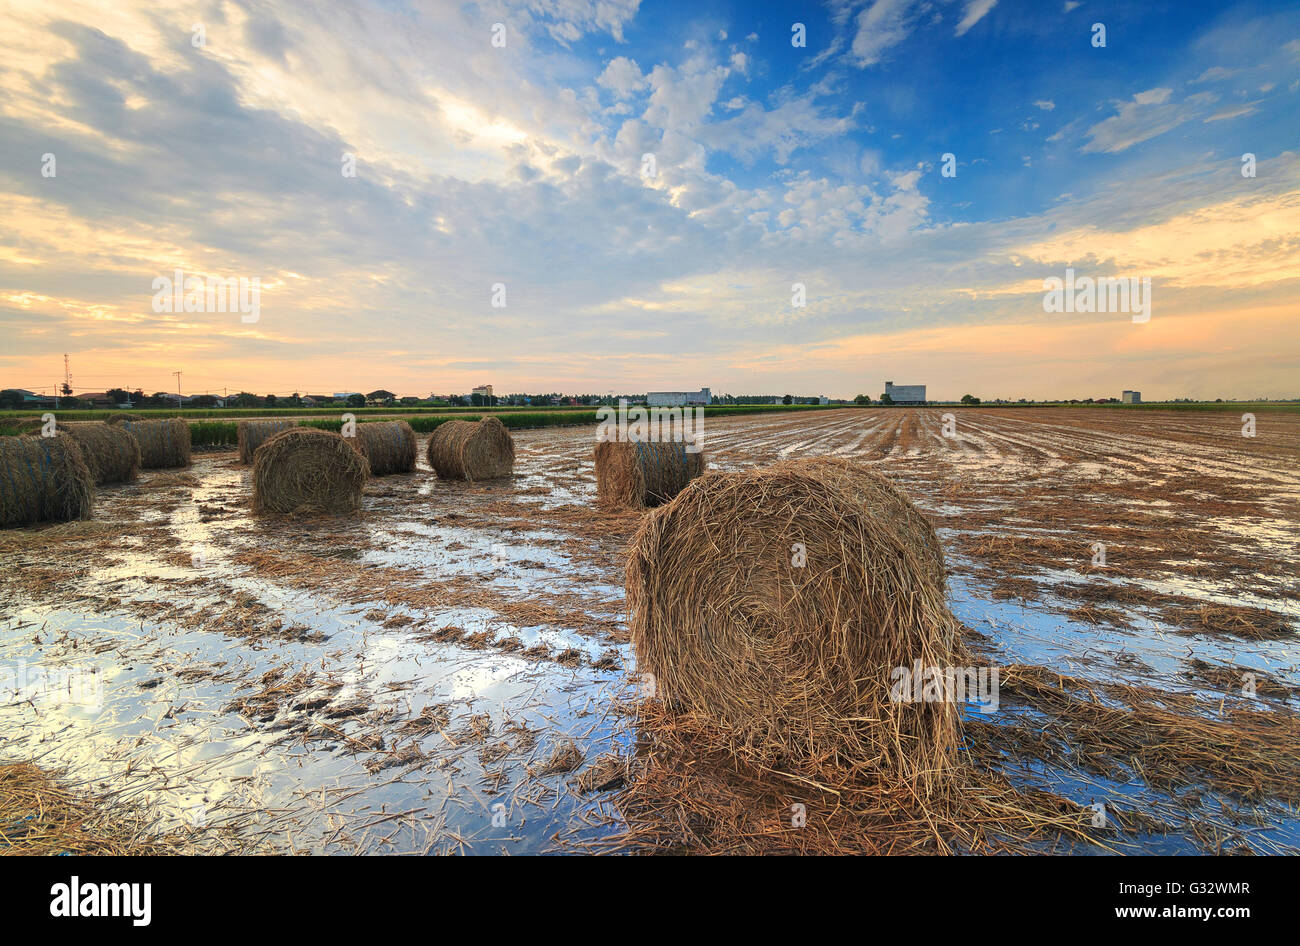 Hay bales in field, Selangor, Malaysia Stock Photo